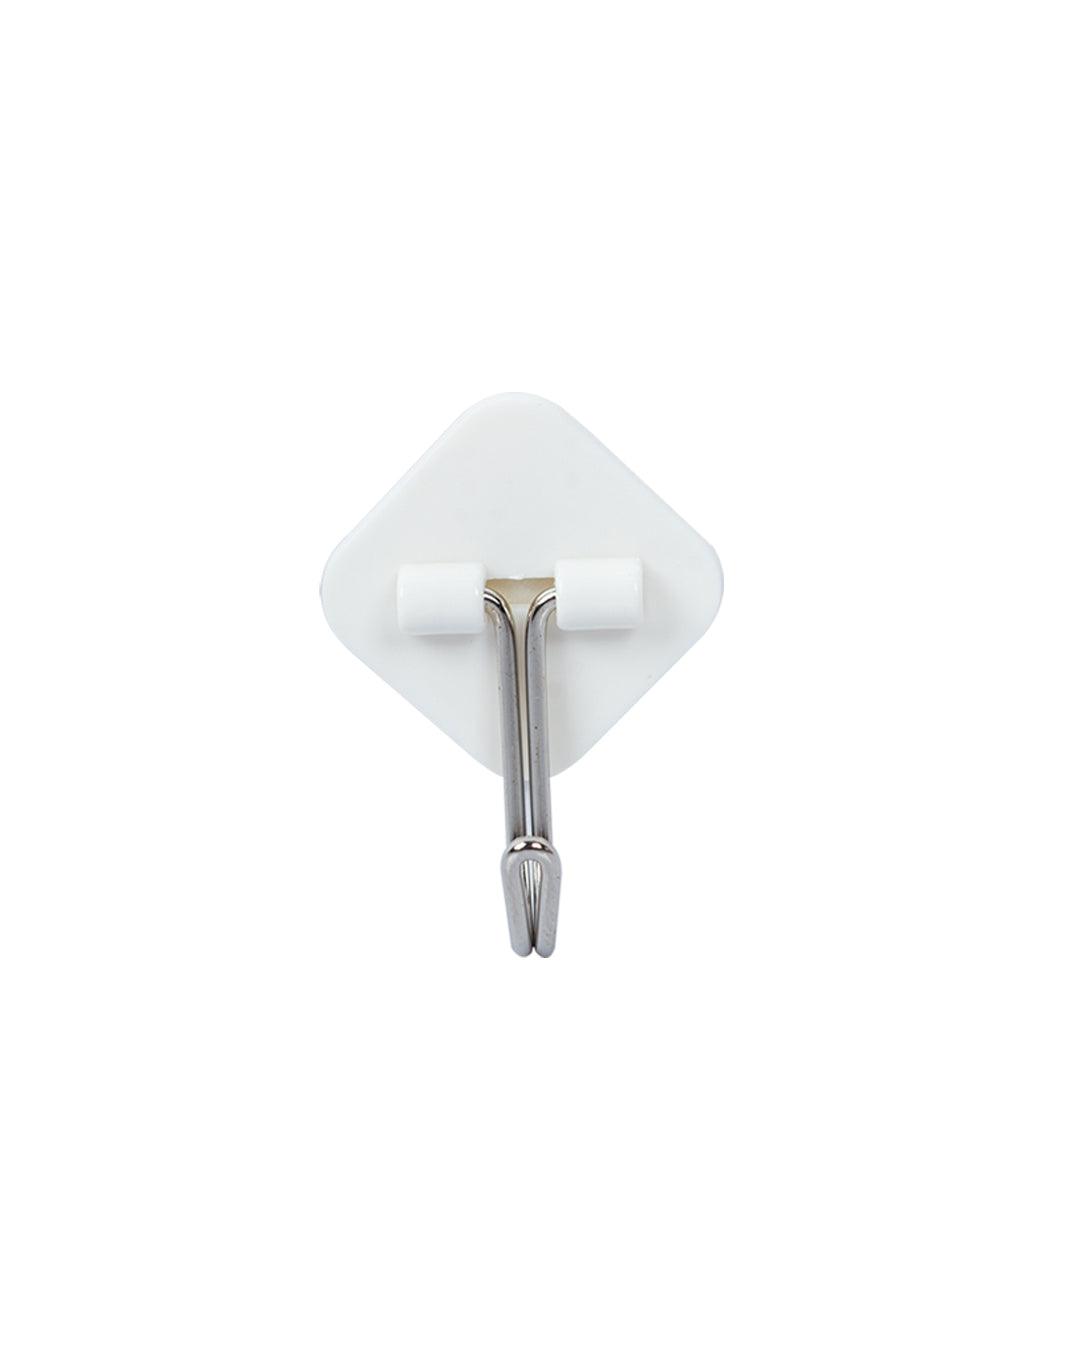 Sticky Hook, Self Adhesive Back, Polygon Shape Design, White, Plastic - MARKET 99